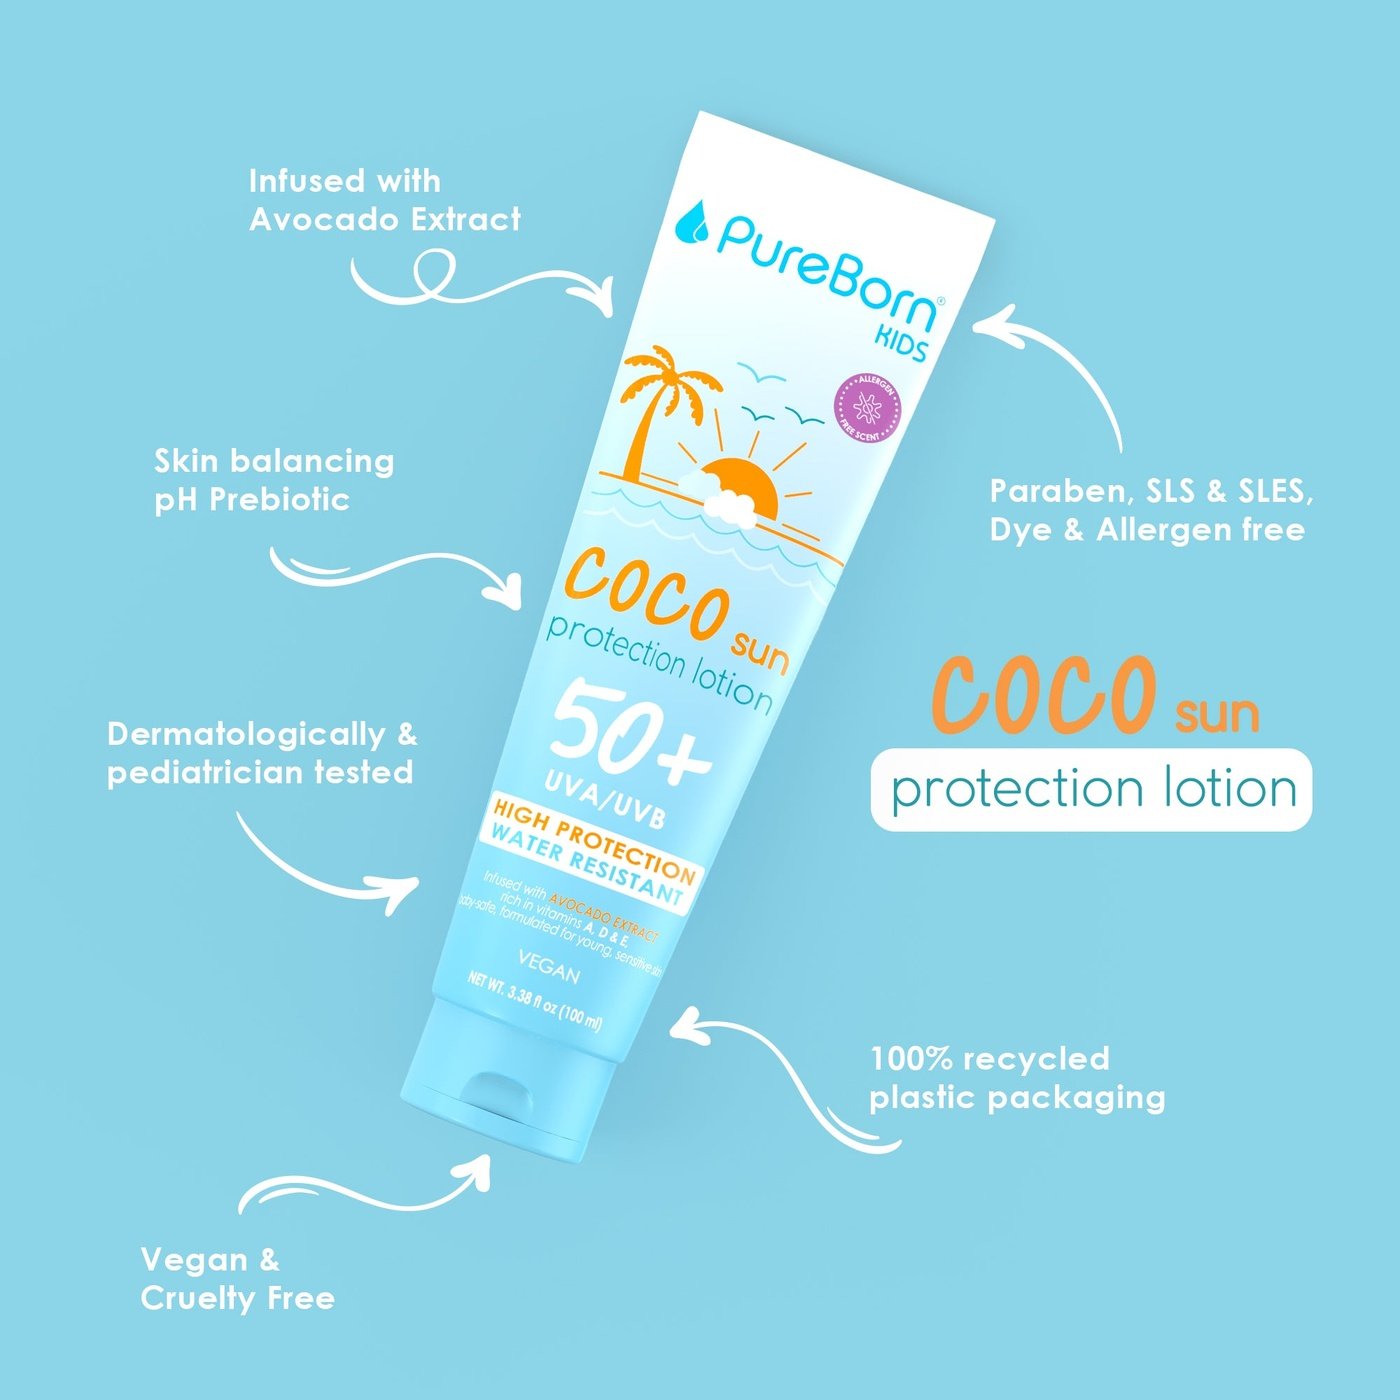 Coco Sun Protection Lotion SPF50+